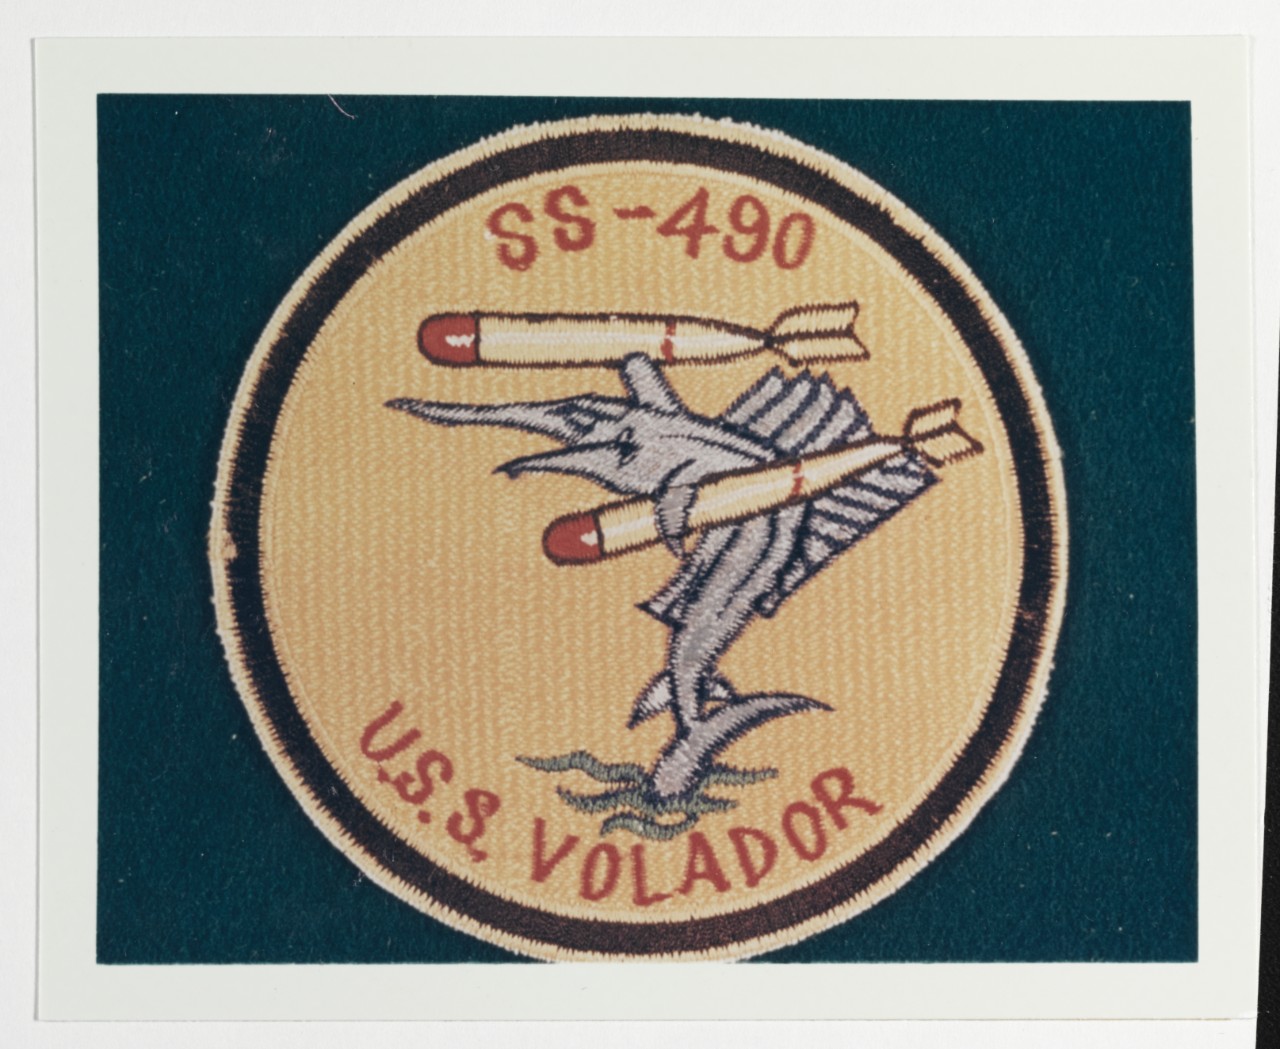 Photo #: NH 72362-KN Insignia: USS Volador (SS-490)